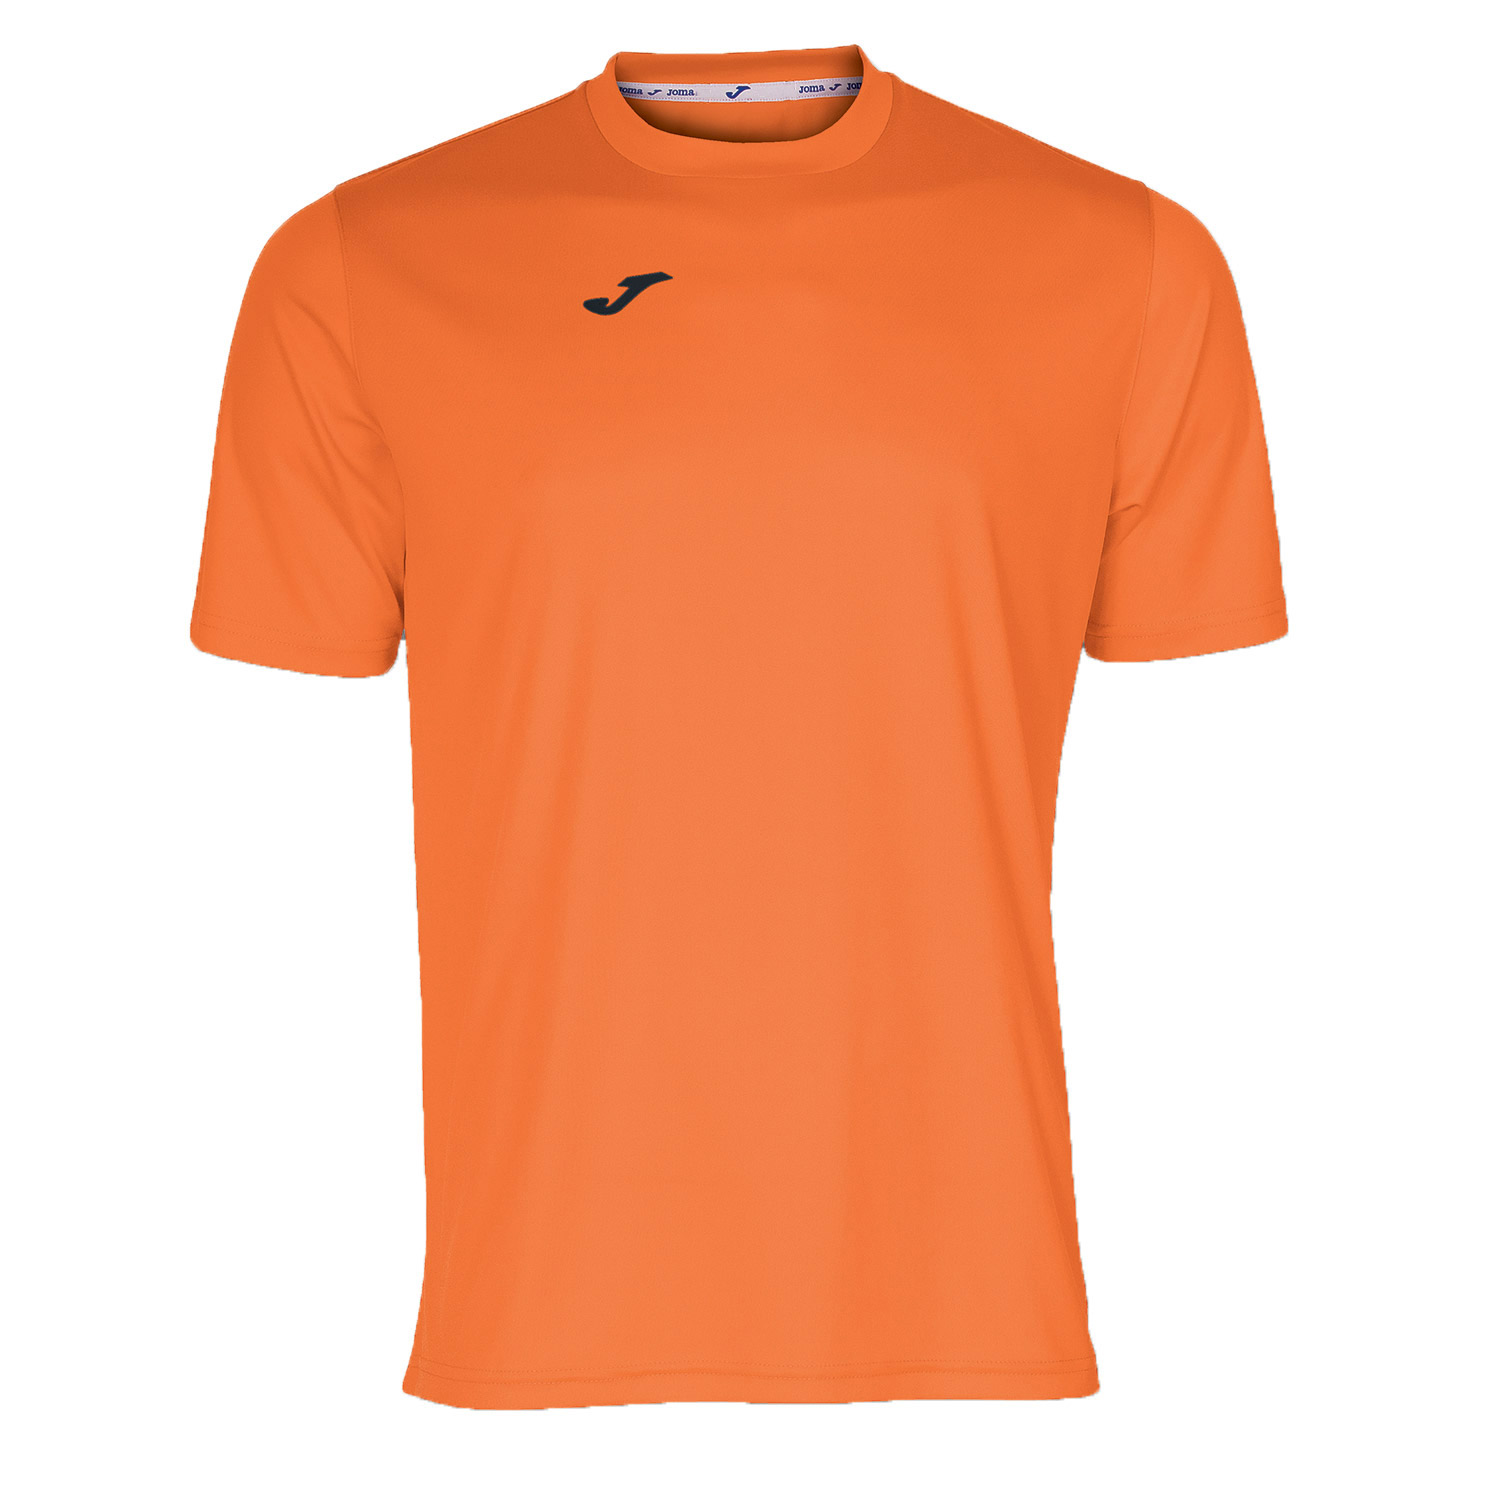 Joma Combi T-Shirt Boy - Orange/Black